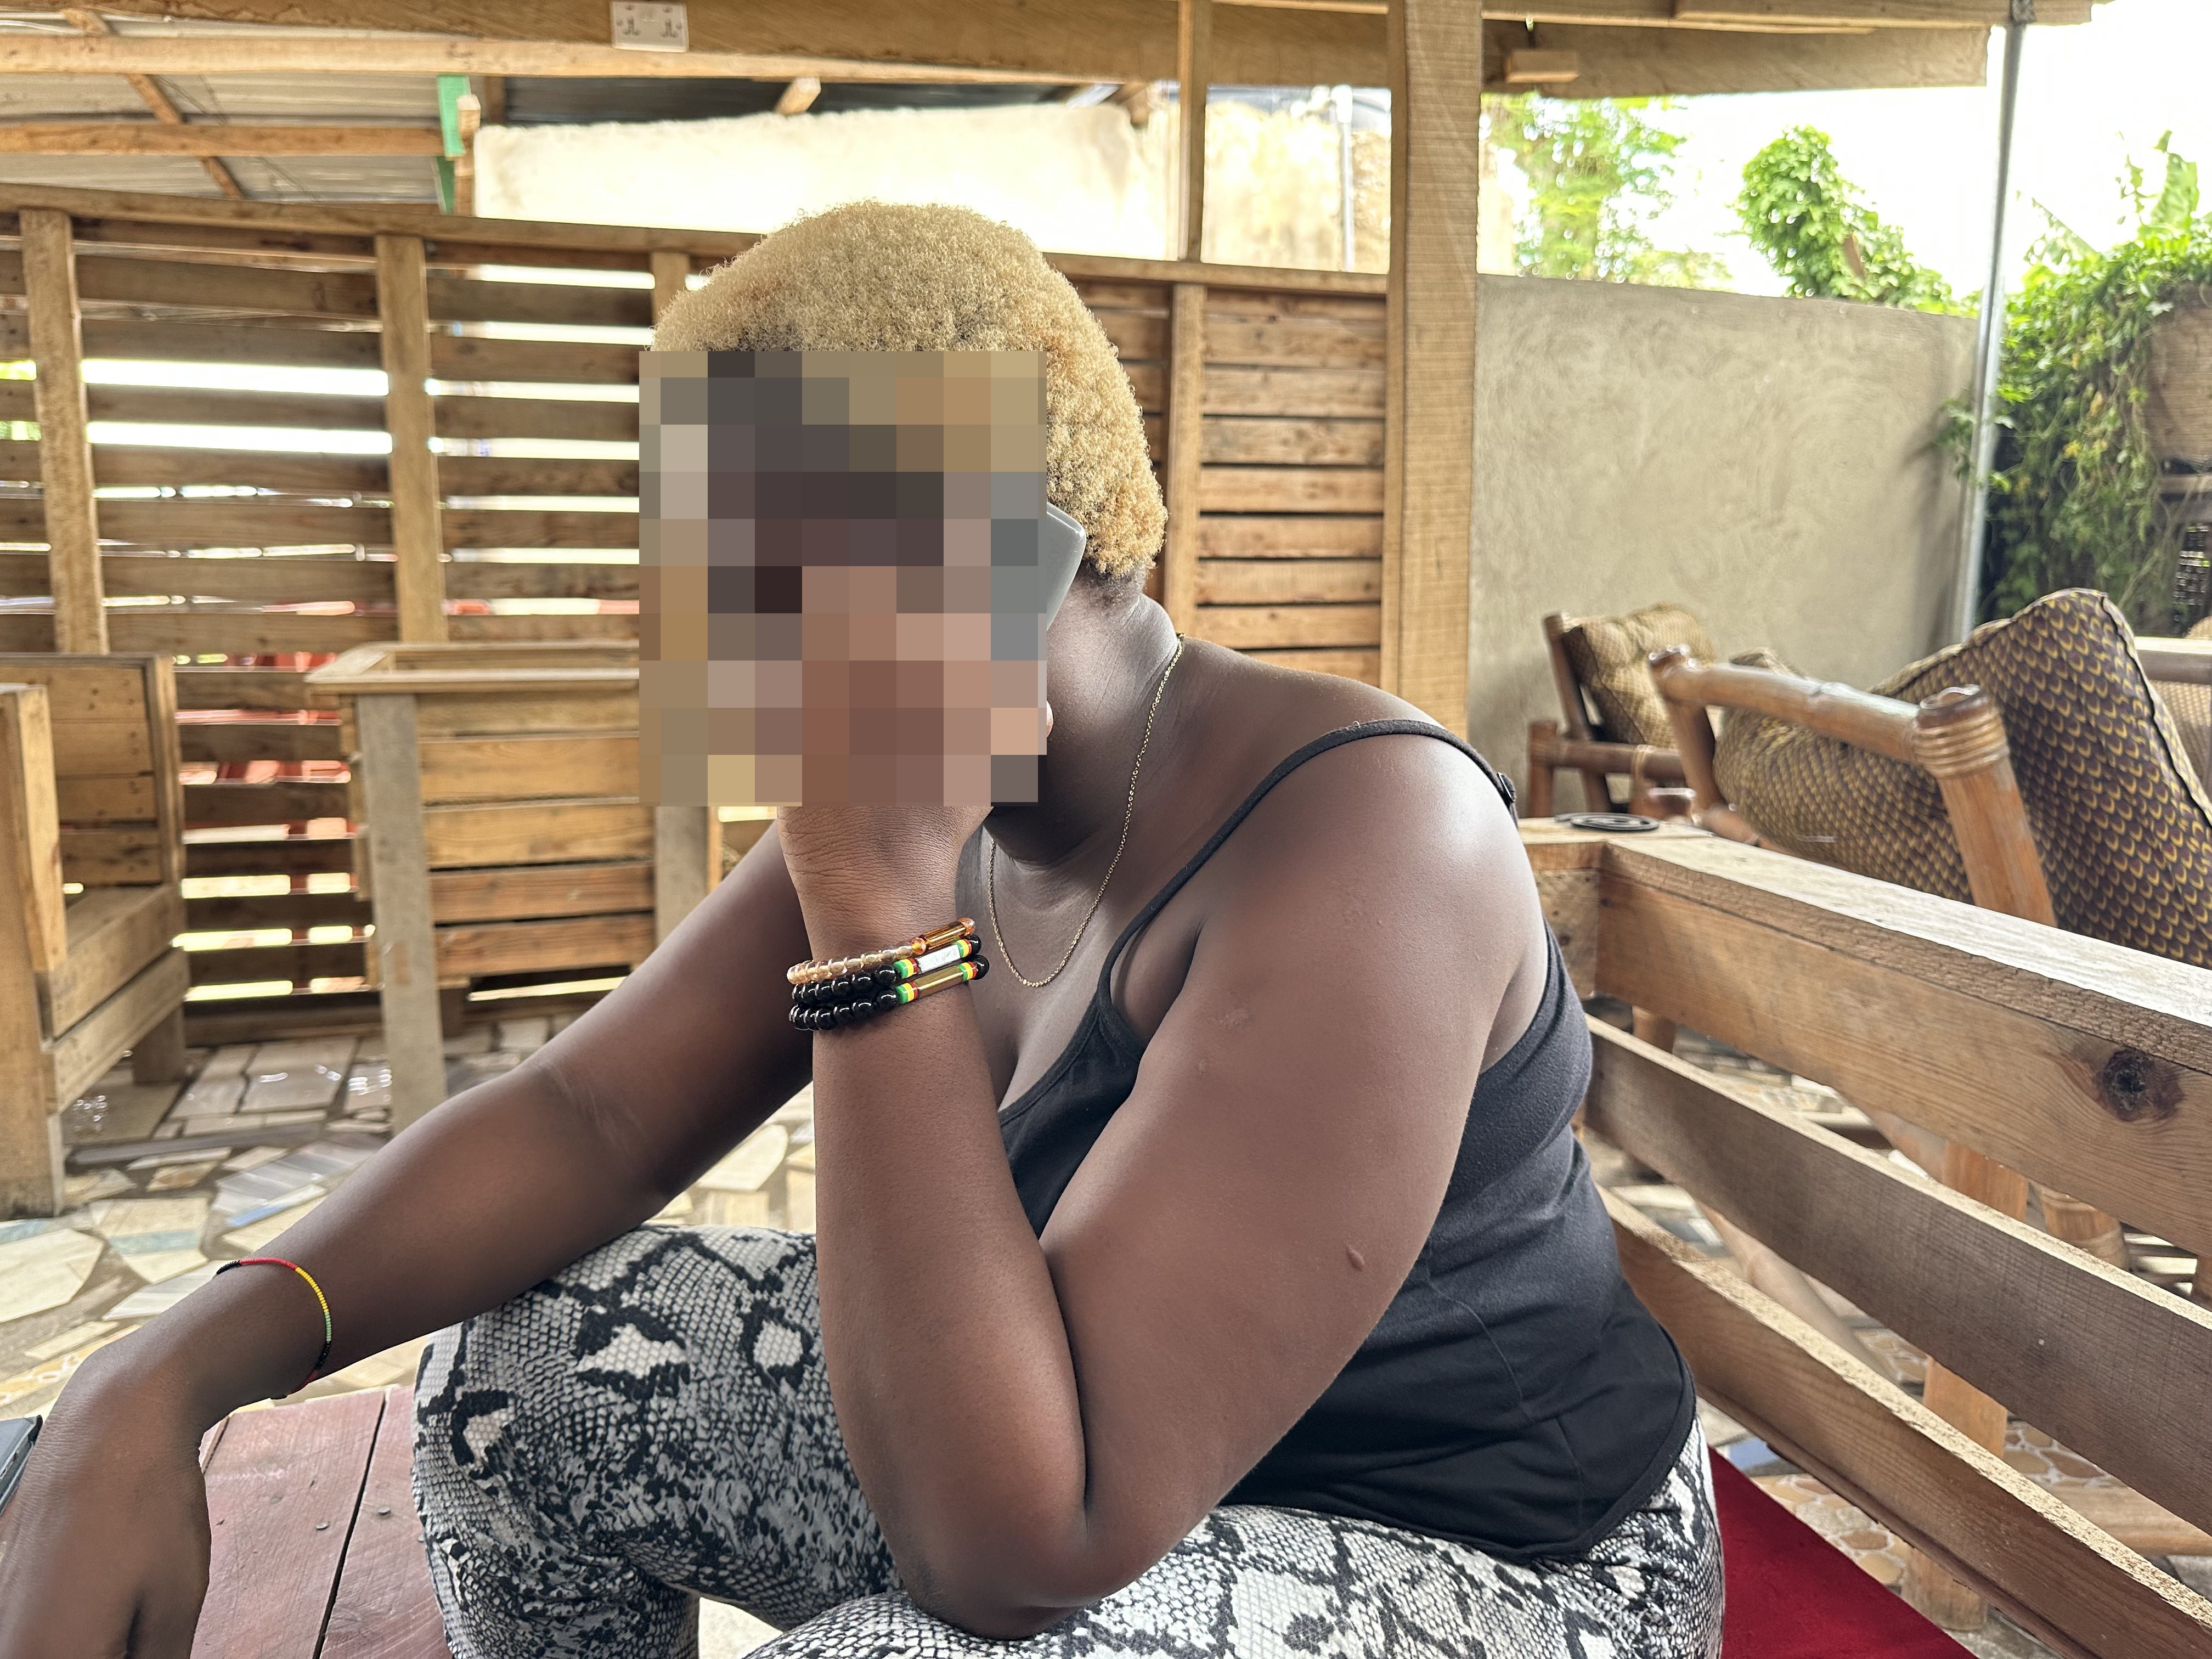 I knew it was a risk A Nigerian migrant sex worker in Ghana Womens Rights Al Jazeera photo photo